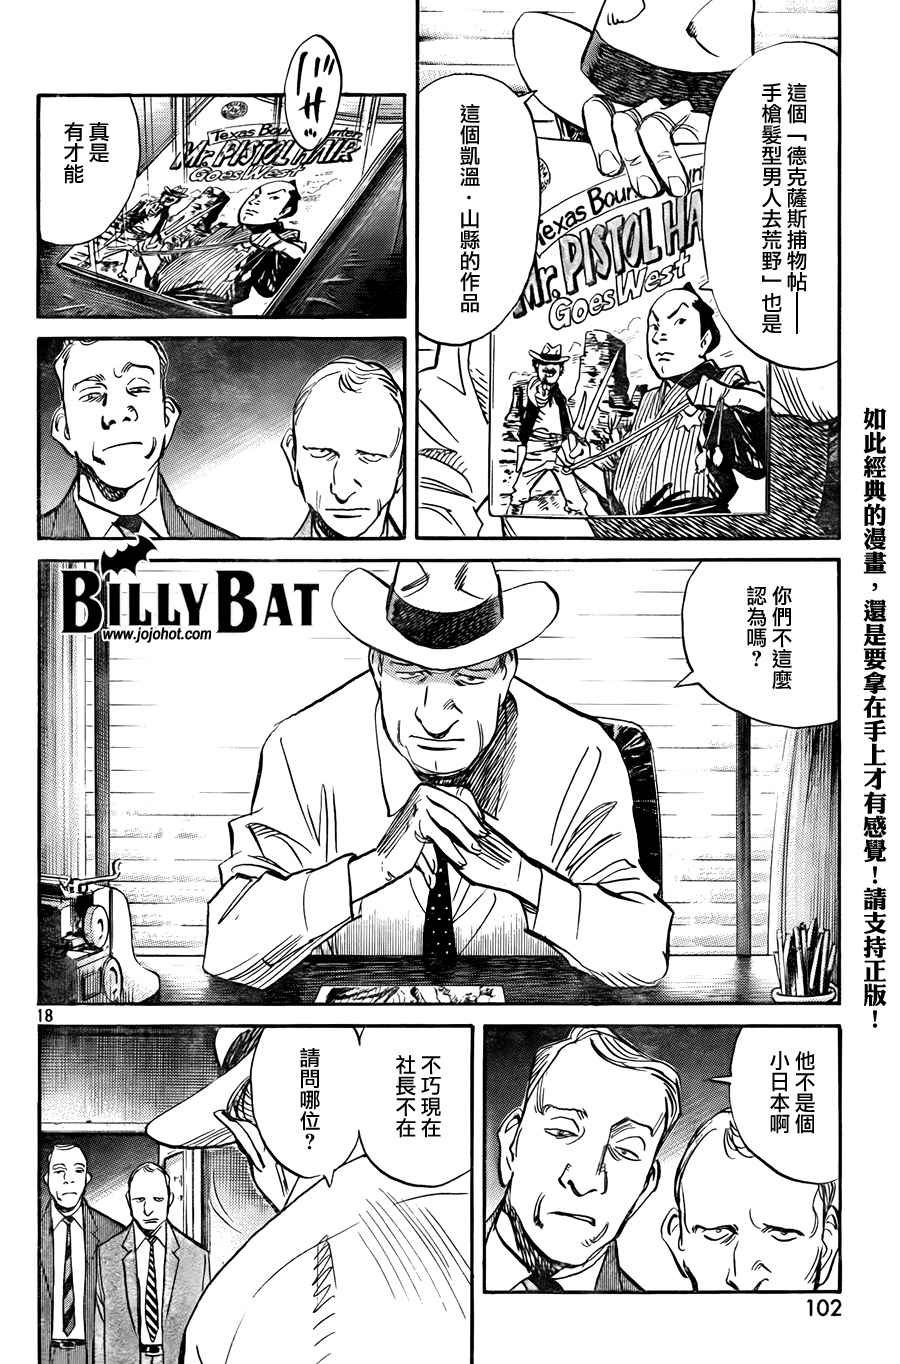 Billy_Bat - 第4卷(2/5) - 8